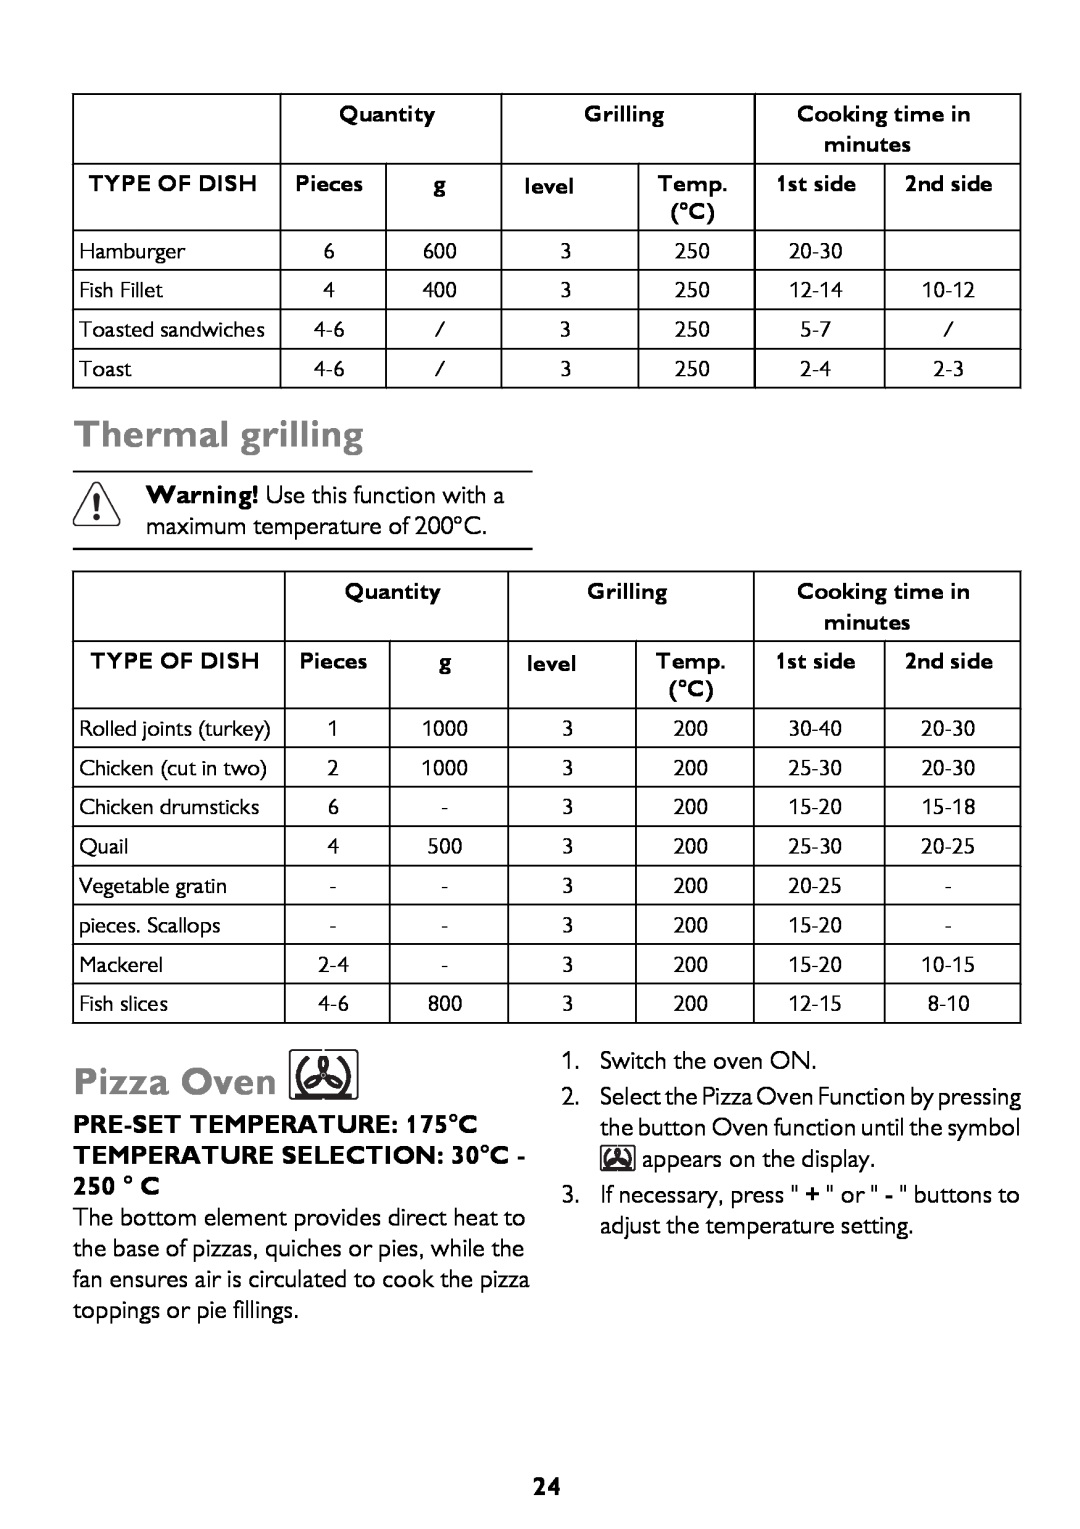 John Lewis JLBIOS662 Thermal grilling, Pizza Oven, PRE-SET TEMPERATURE 175C TEMPERATURE SELECTION 30C - 250 C 